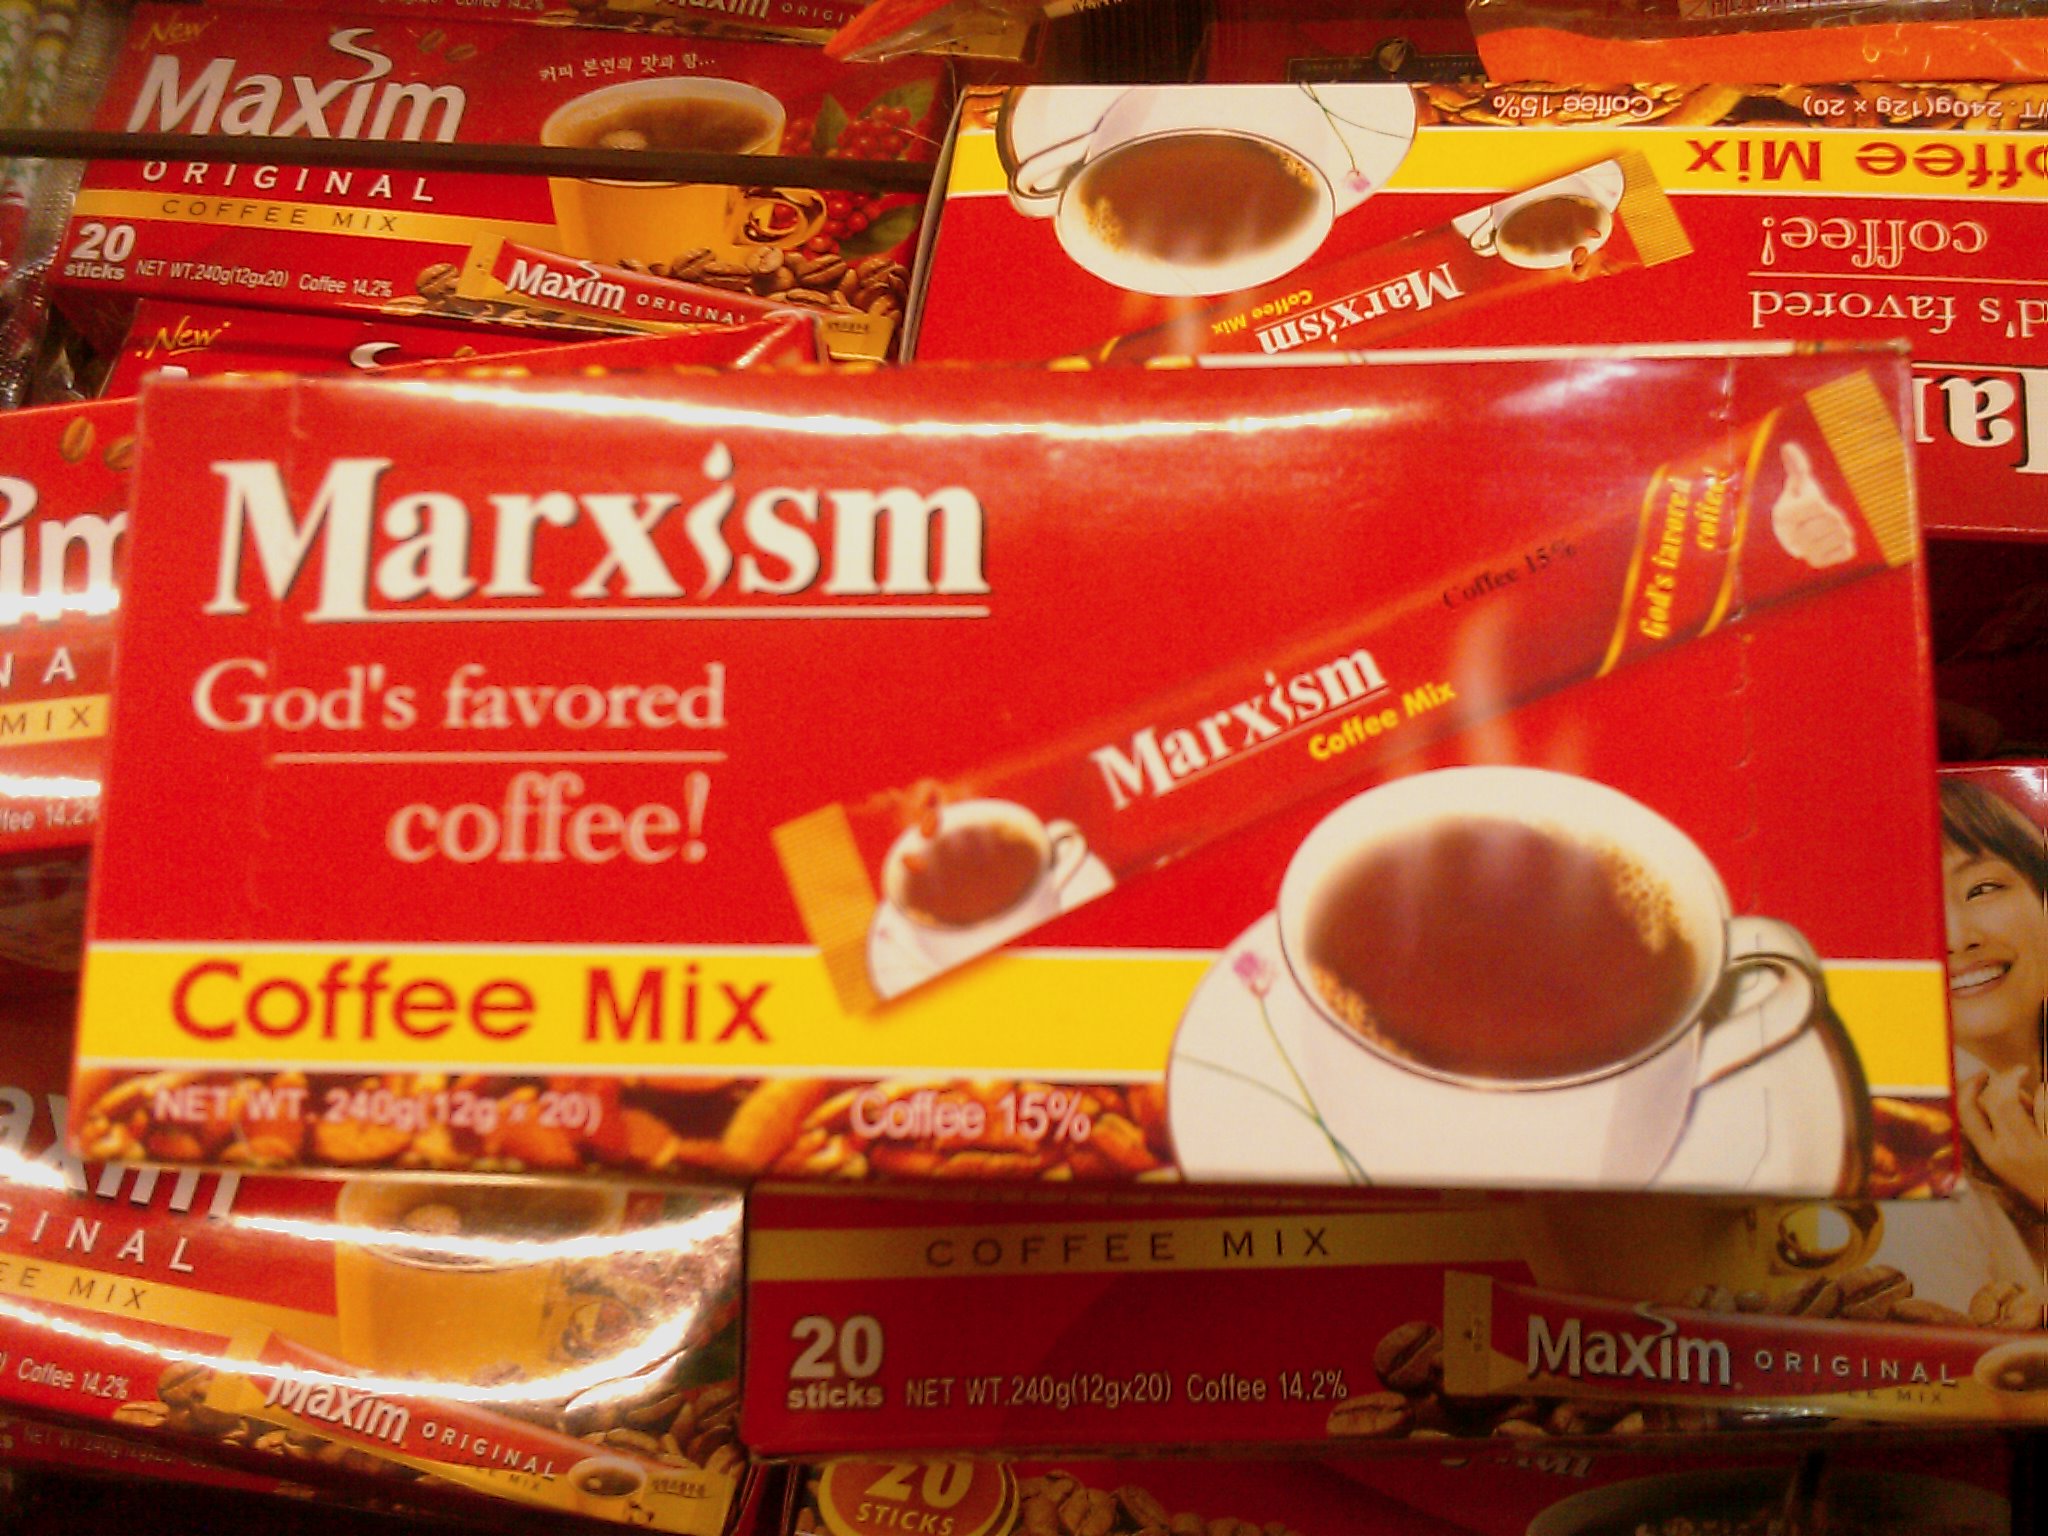 Marxism Coffee: God's favored brand!